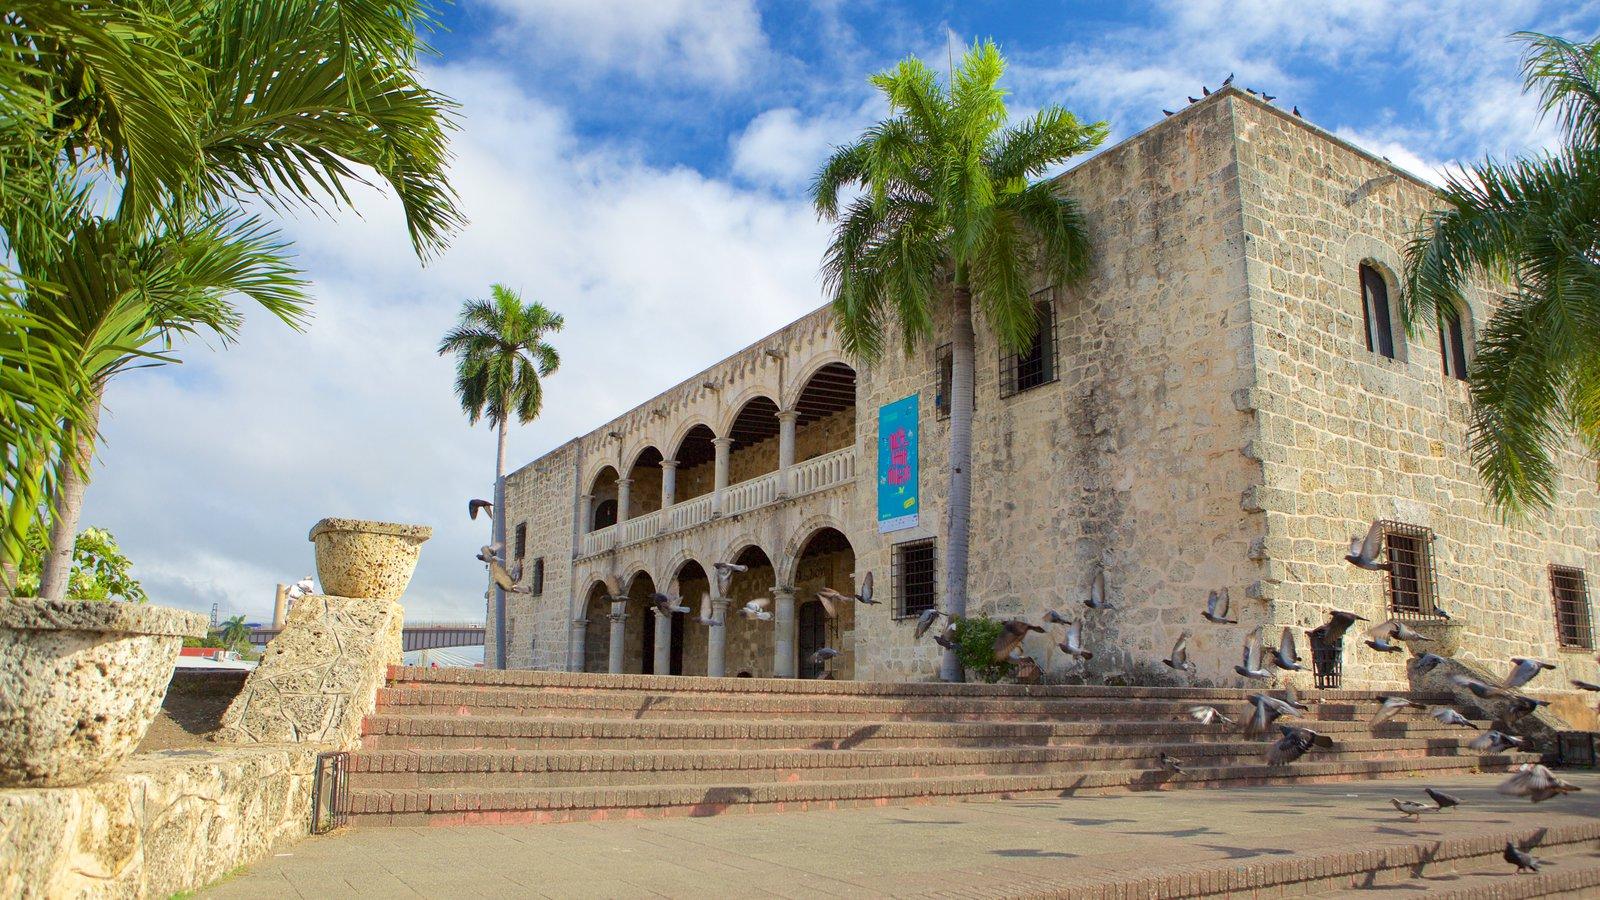 Фото Алькасар-де-Колон или Дворец Колумба